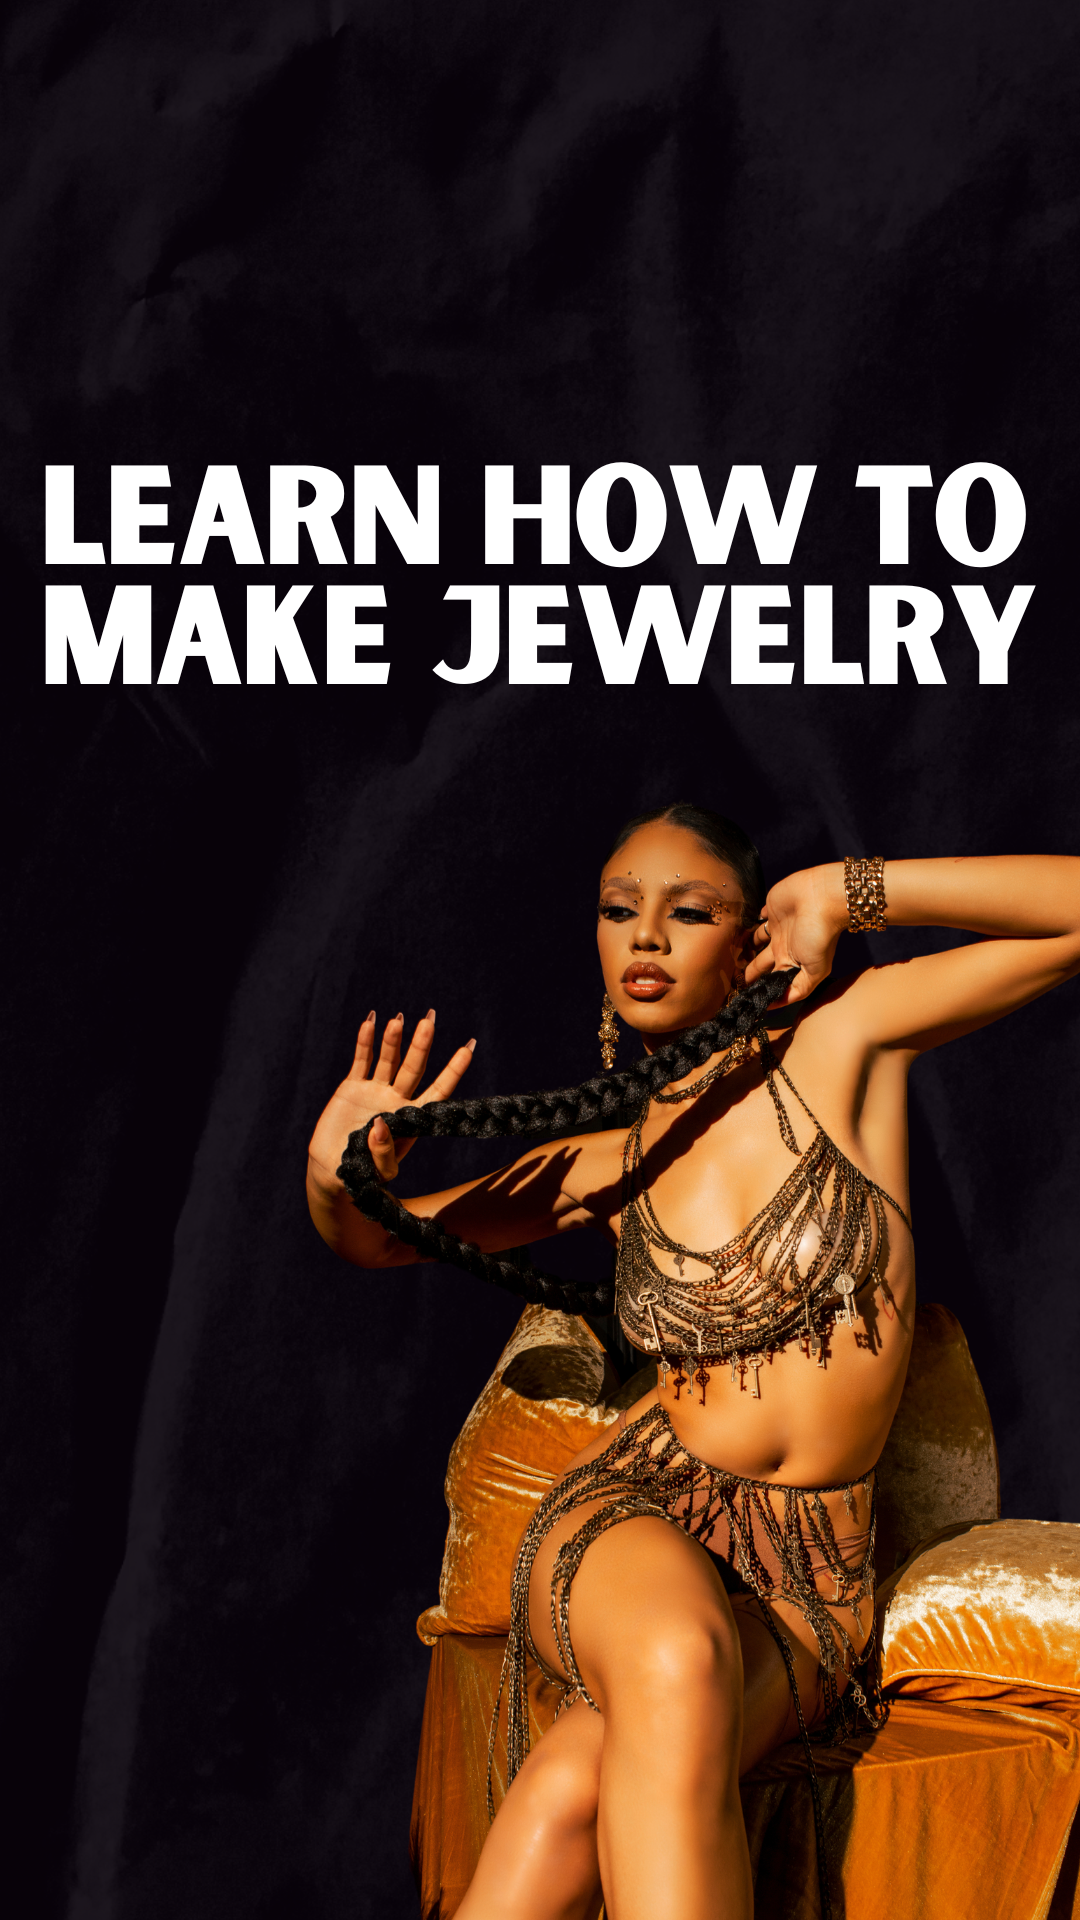 Jewelry making class